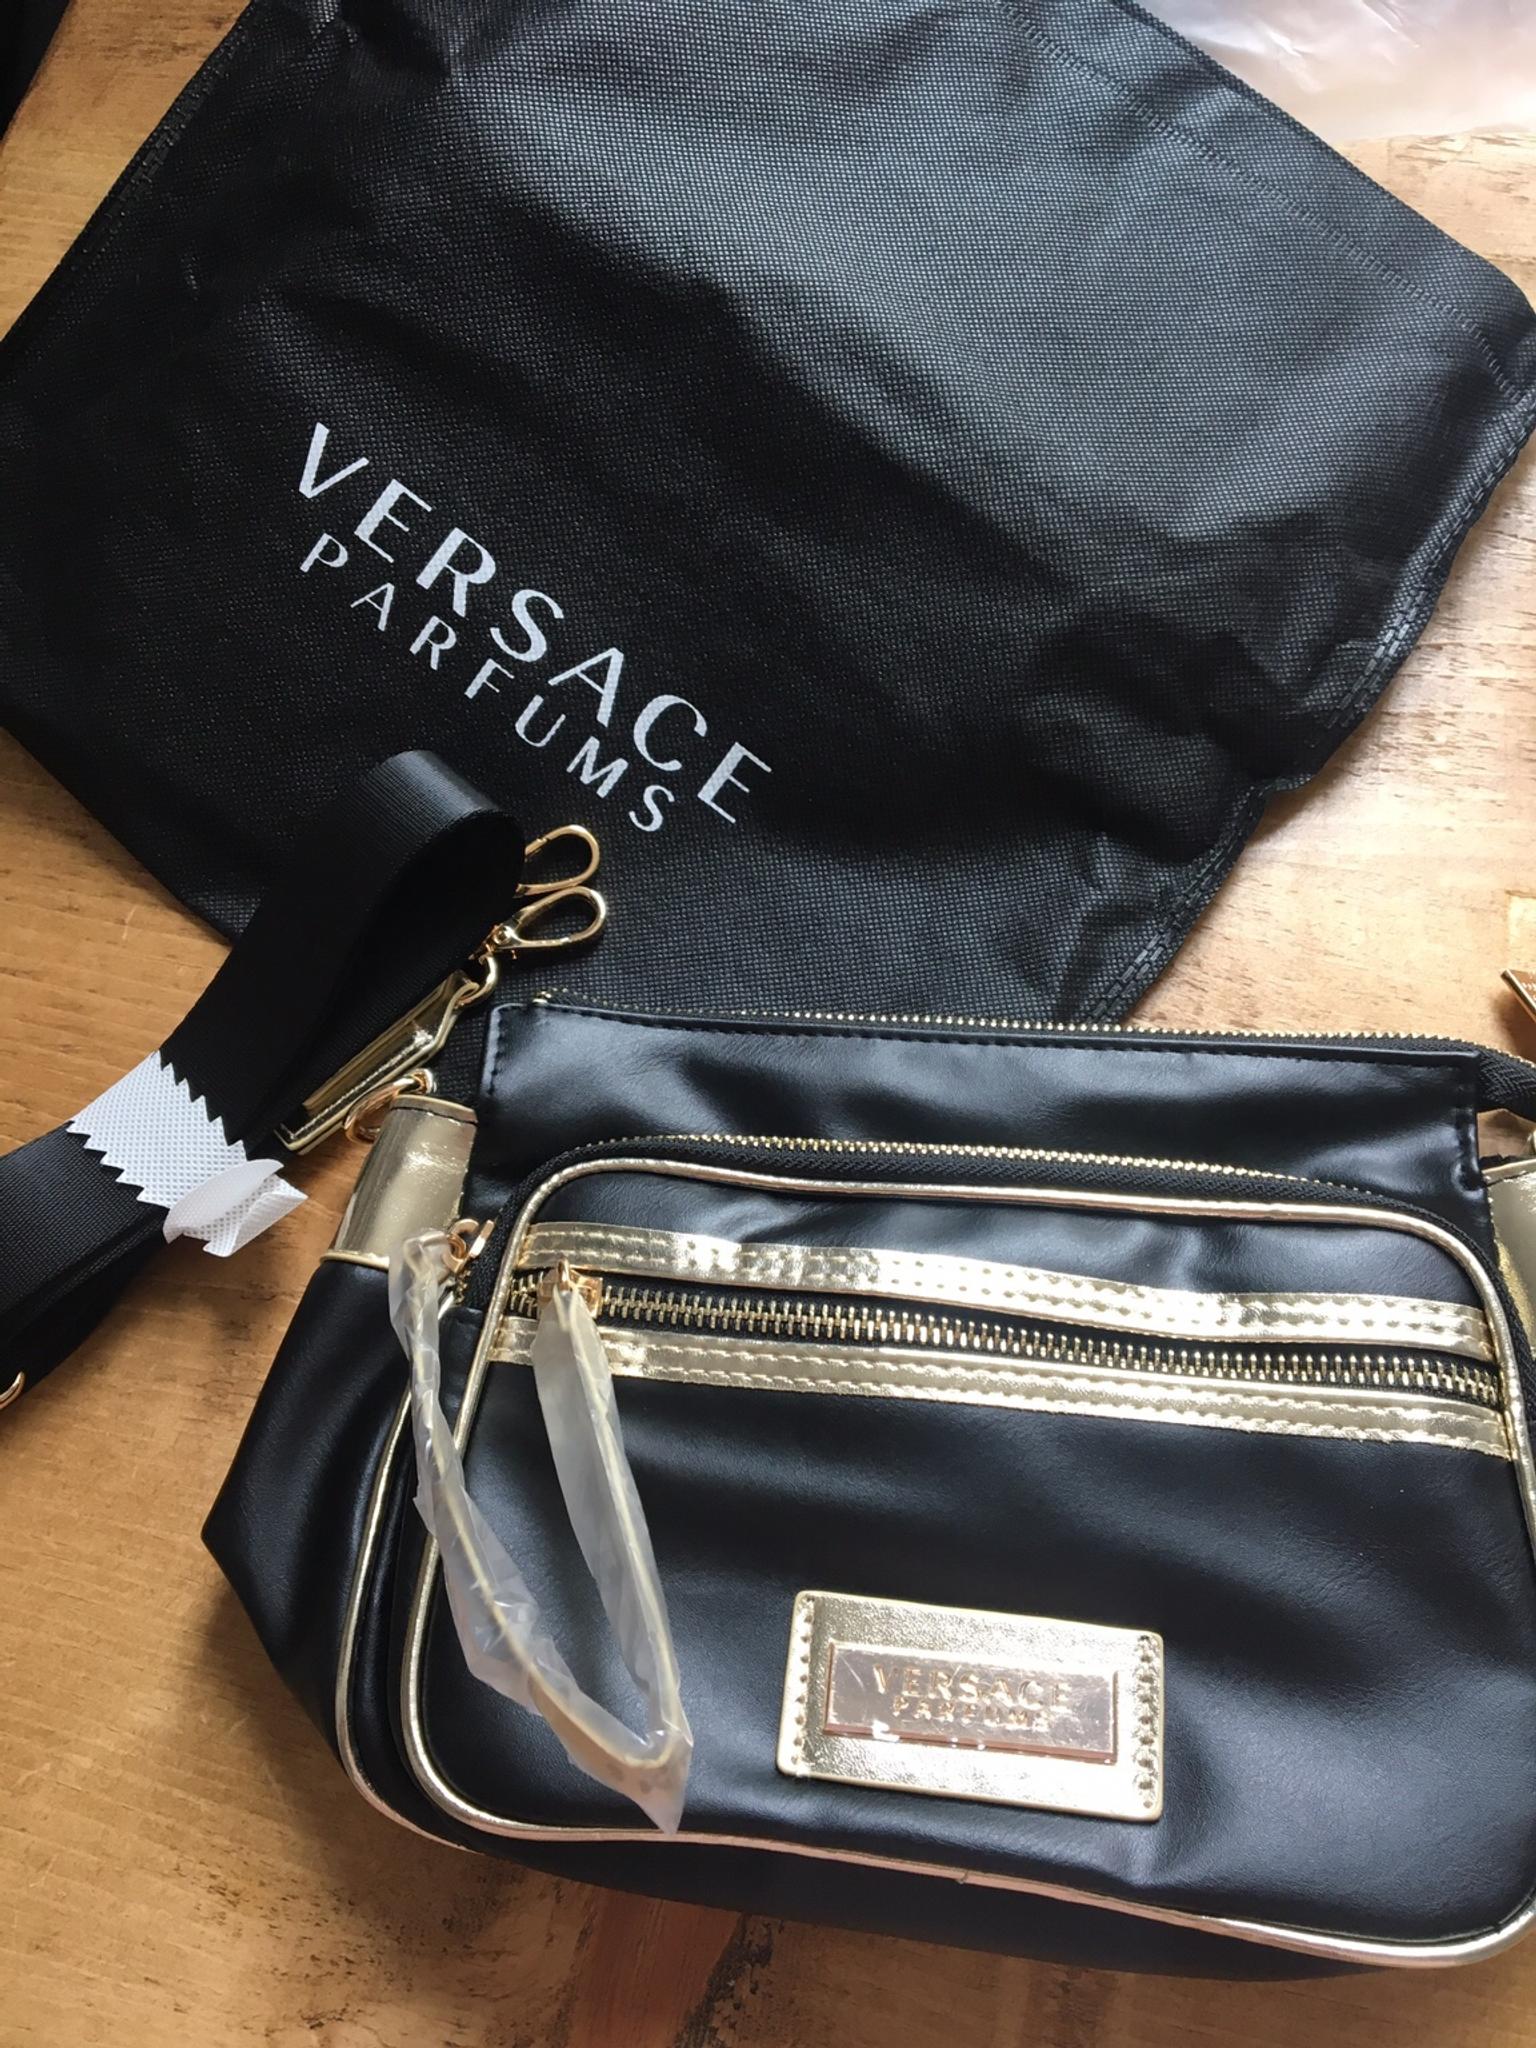 versace parfums handbag